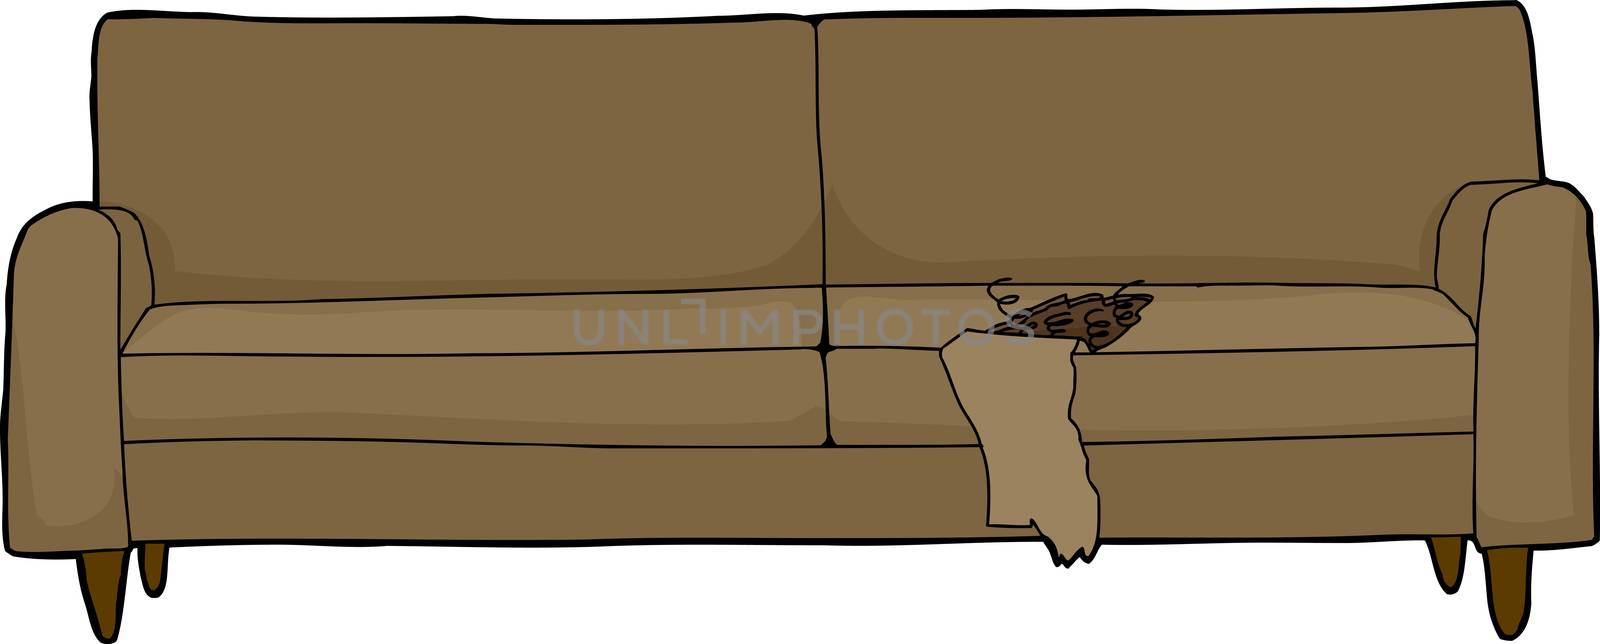 Ripped Cushion on Sofa by TheBlackRhino